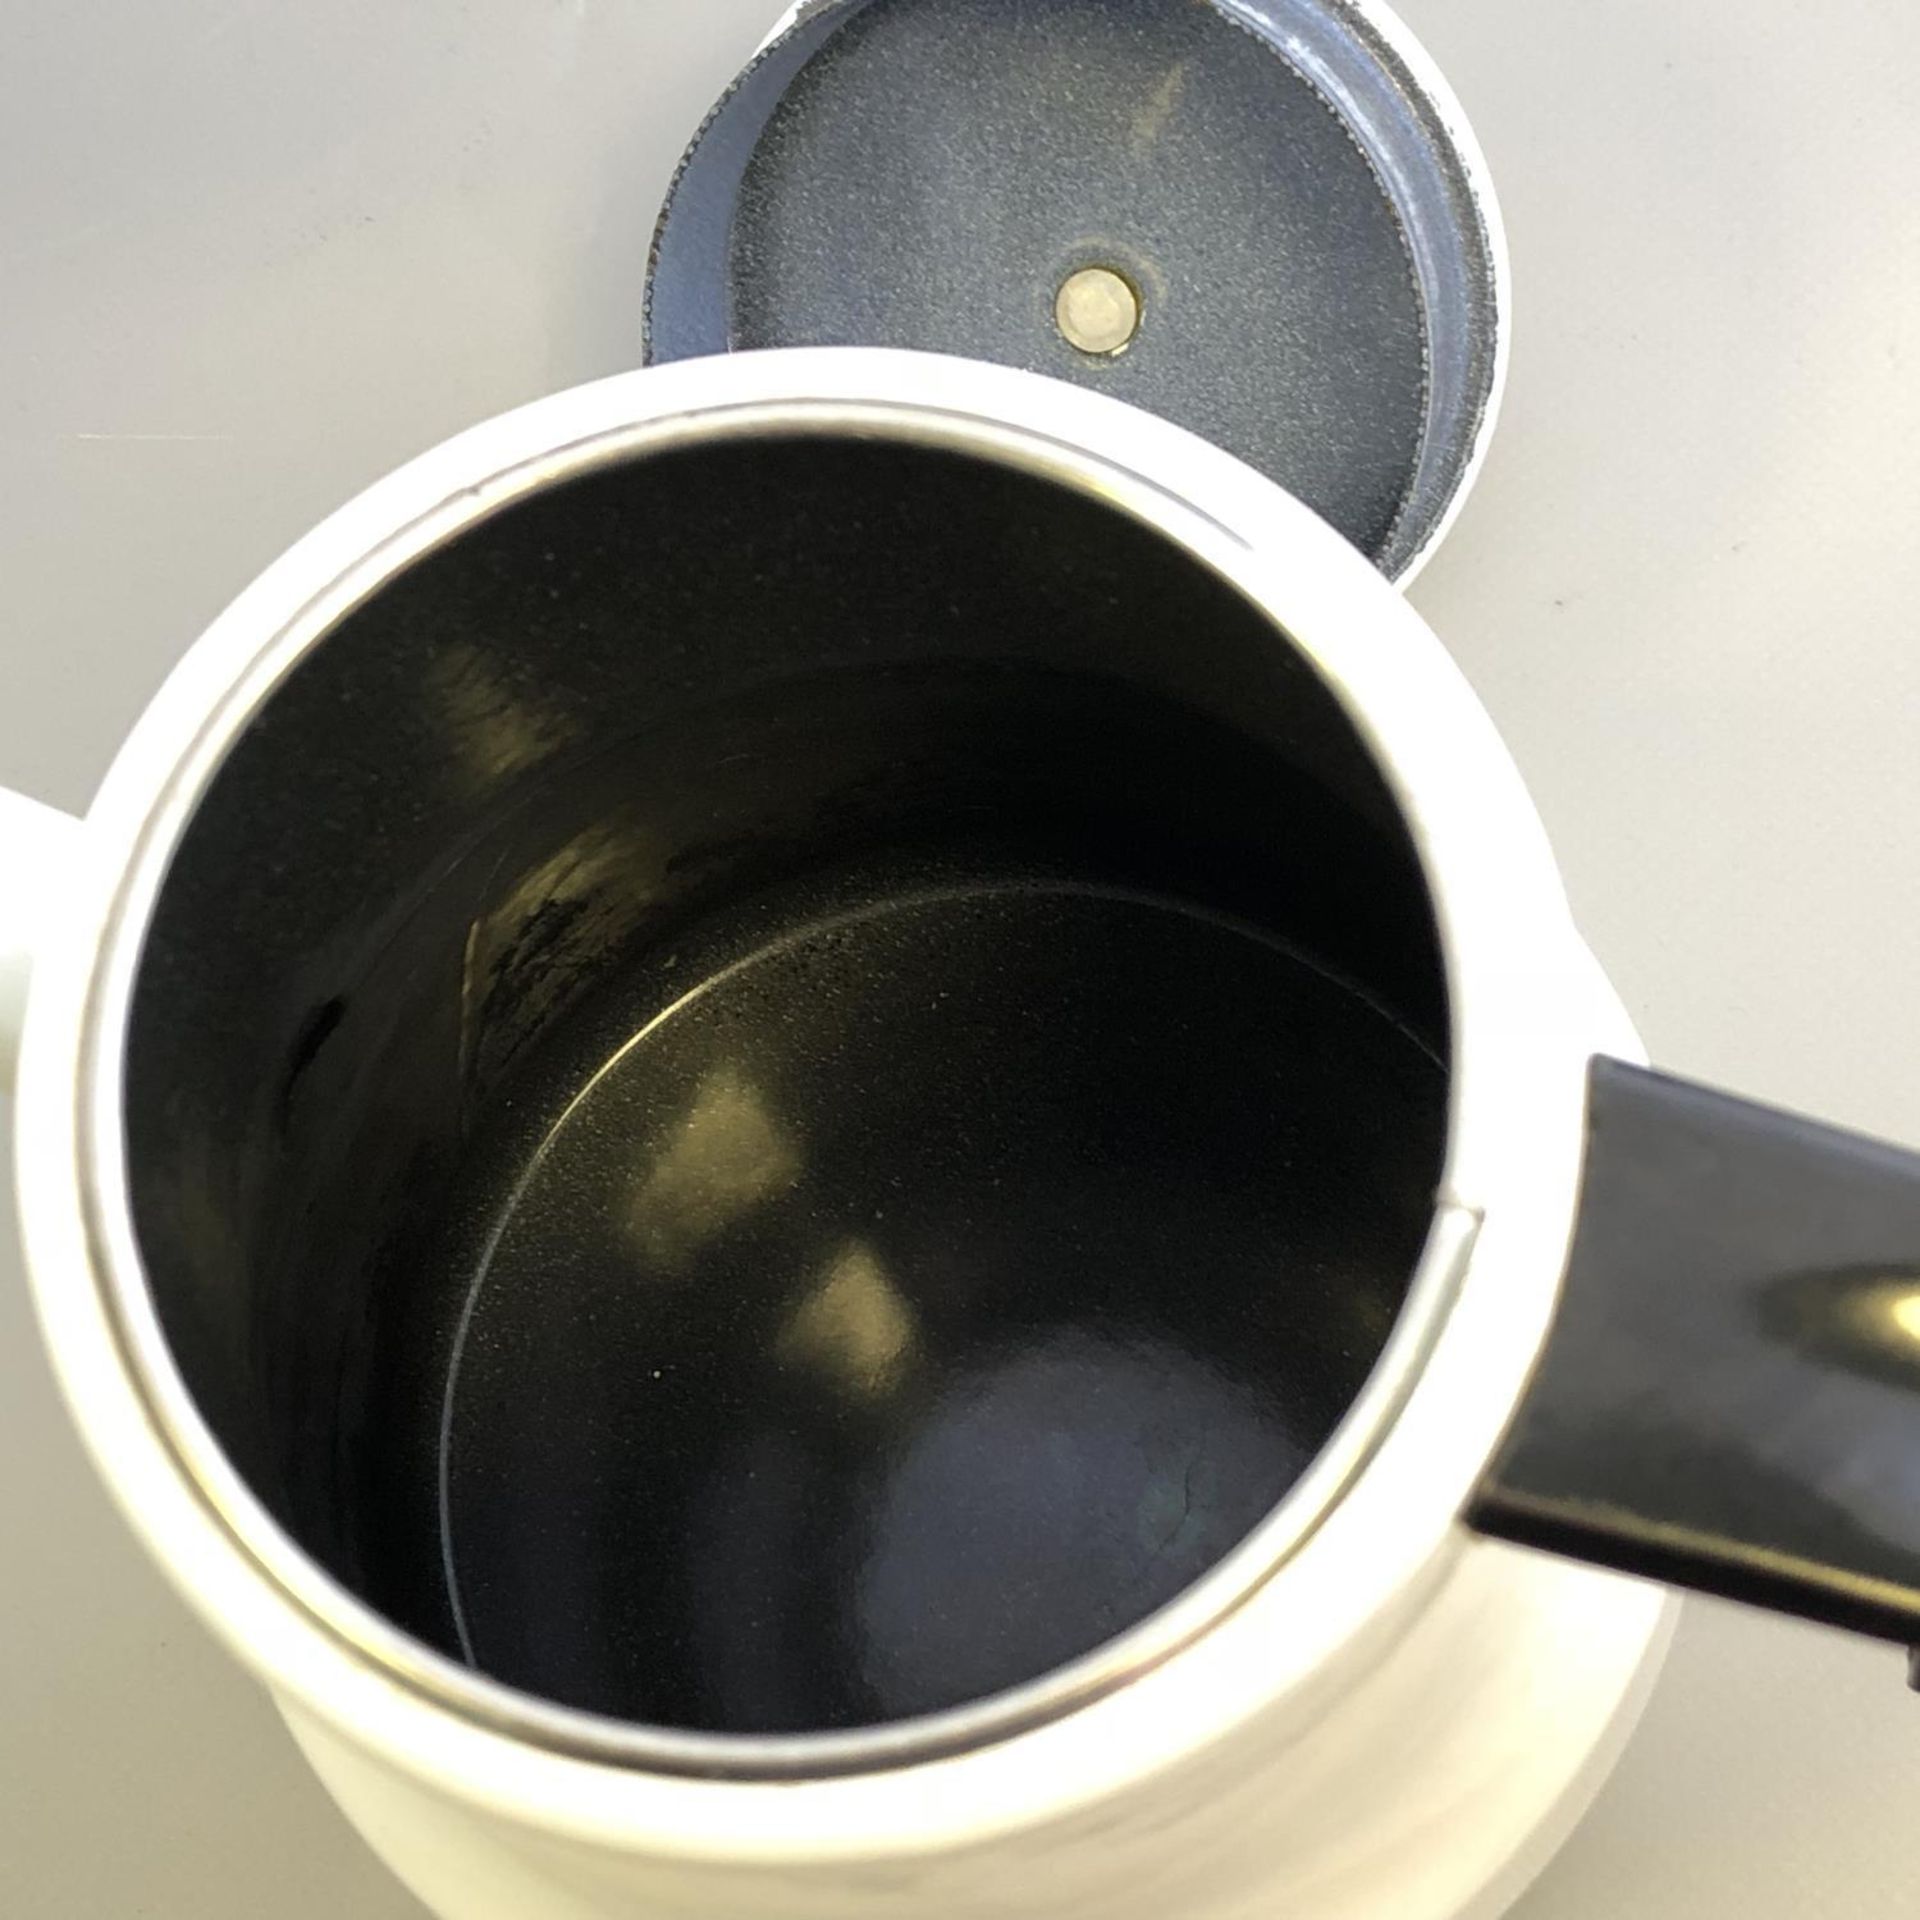 Scandinavian Design Enamel Coffee Pot - Unmarked - Black & White Retro Kitchen - Image 3 of 5